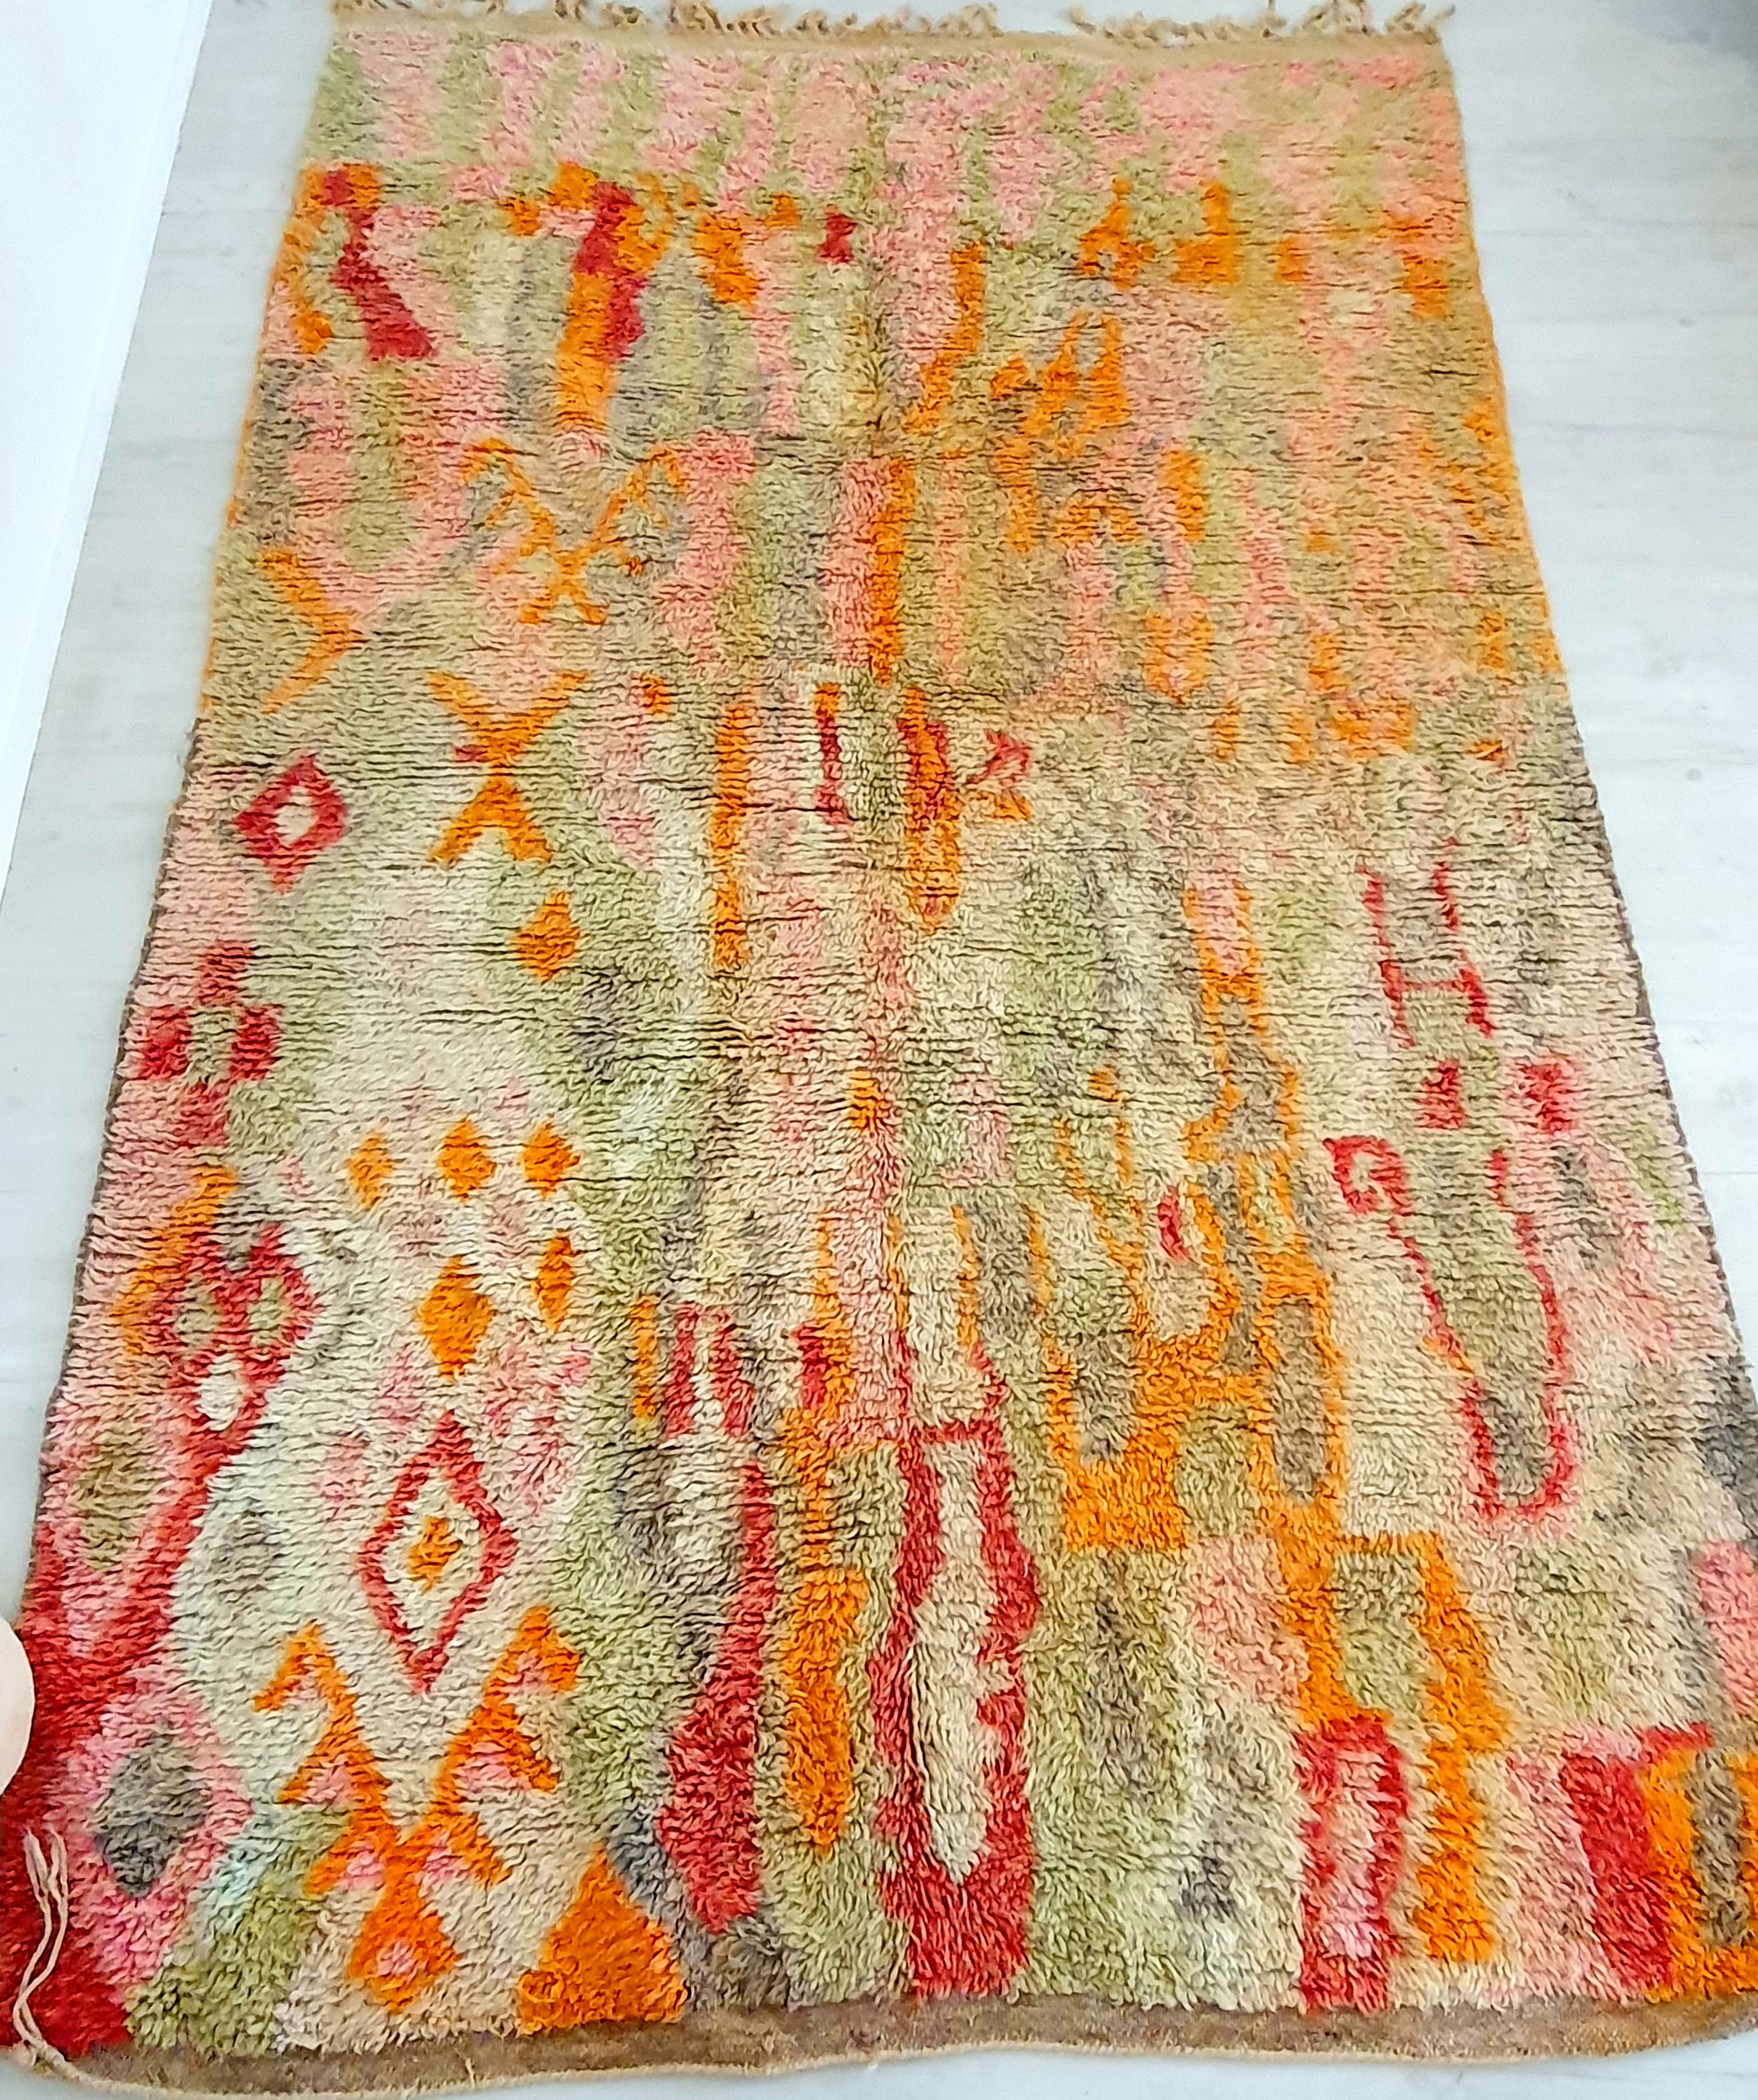 Authentic berber moroccan vintage wool carpet